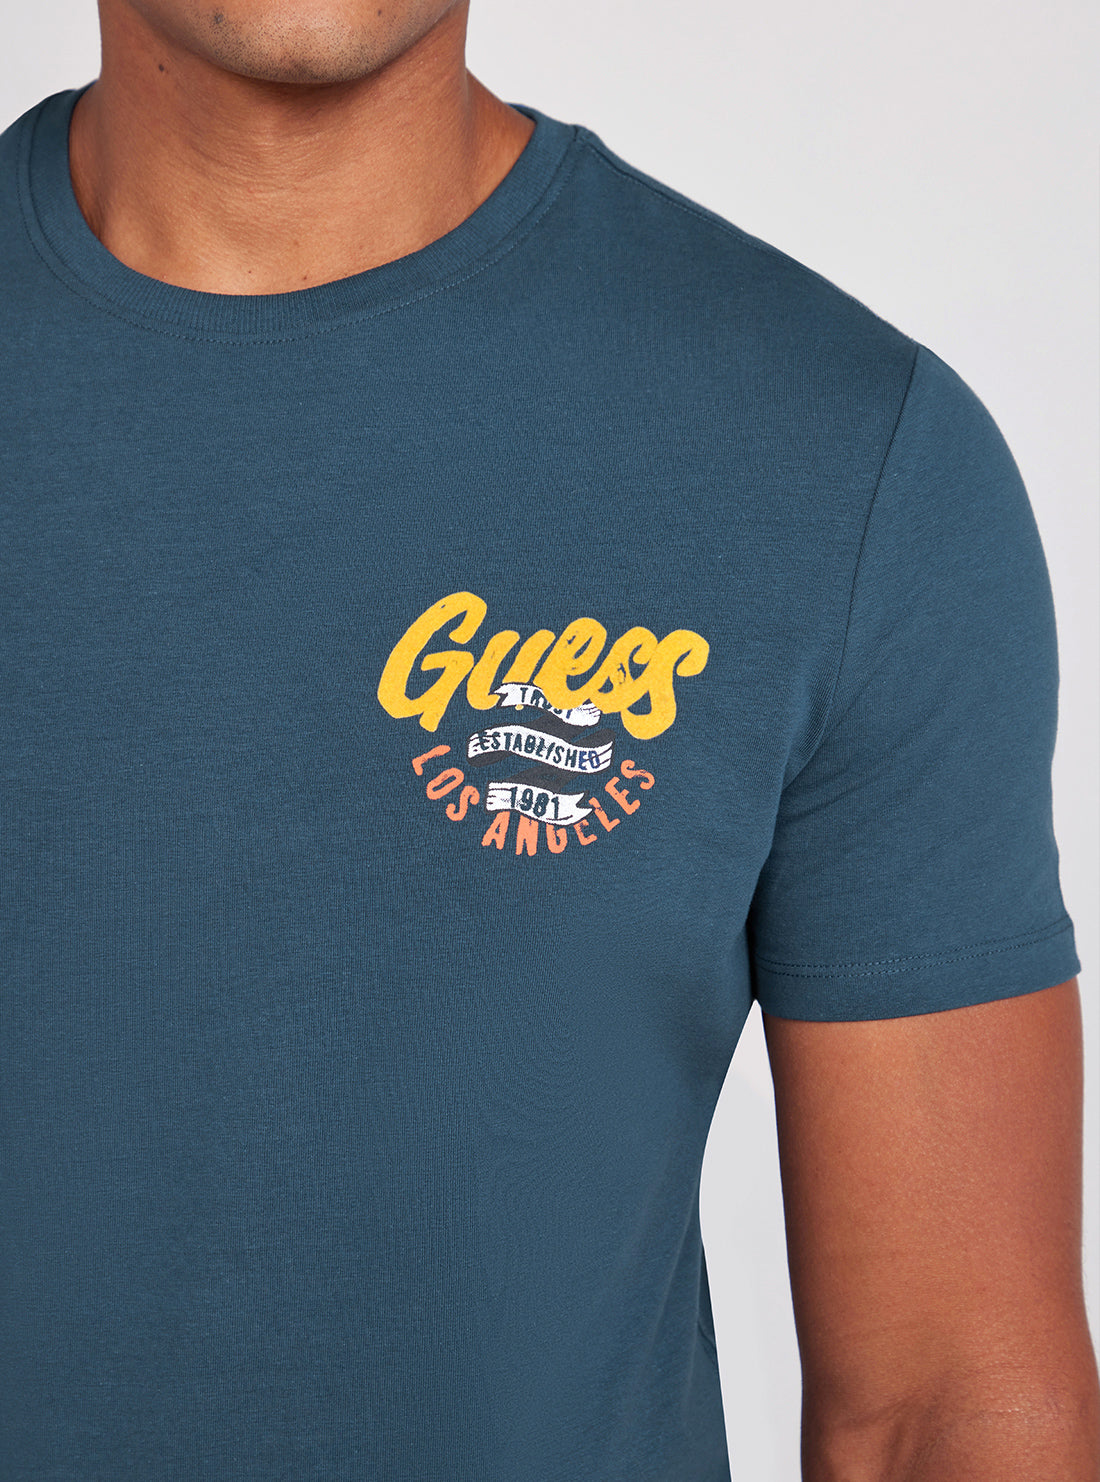 Coastal Blue Ribbon Logo T-Shirt | GUESS Men's Apparel | detail view